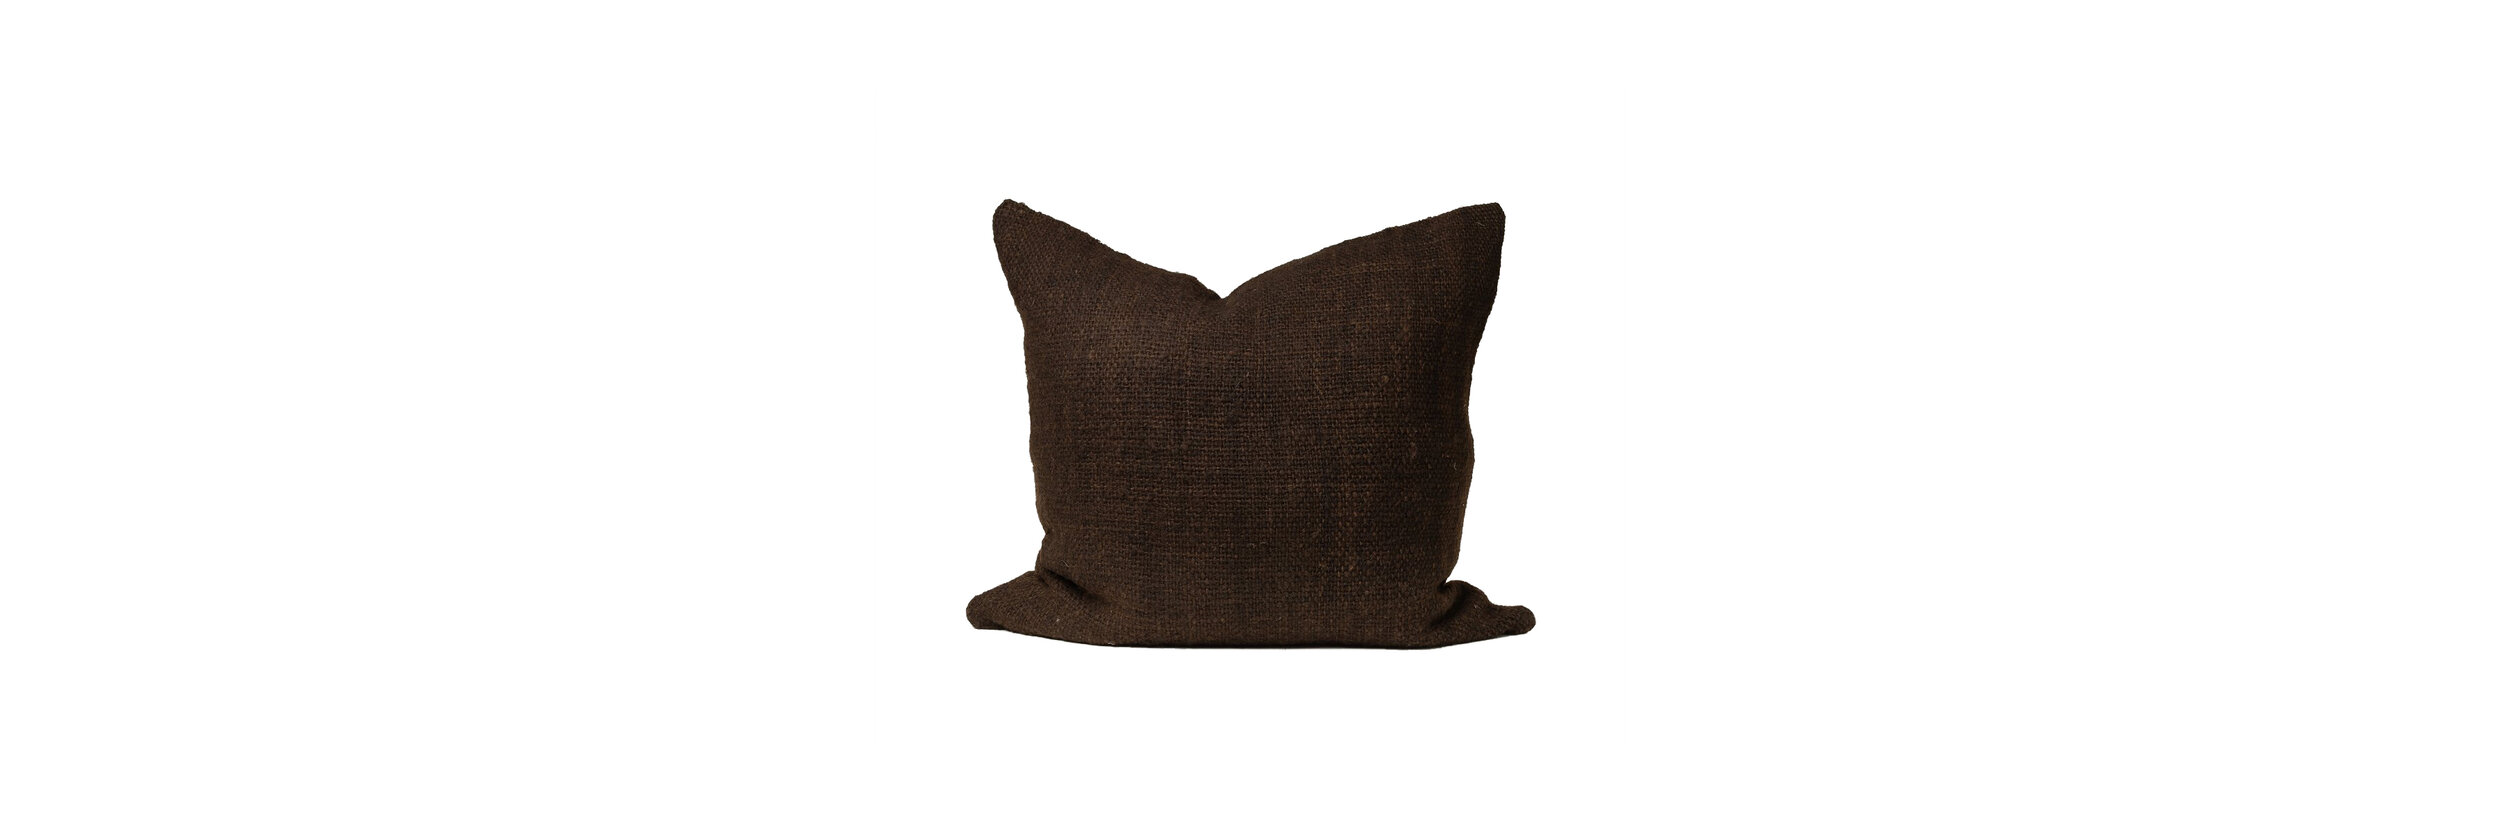 Master Brown Pillows_Amber Interiors.jpg